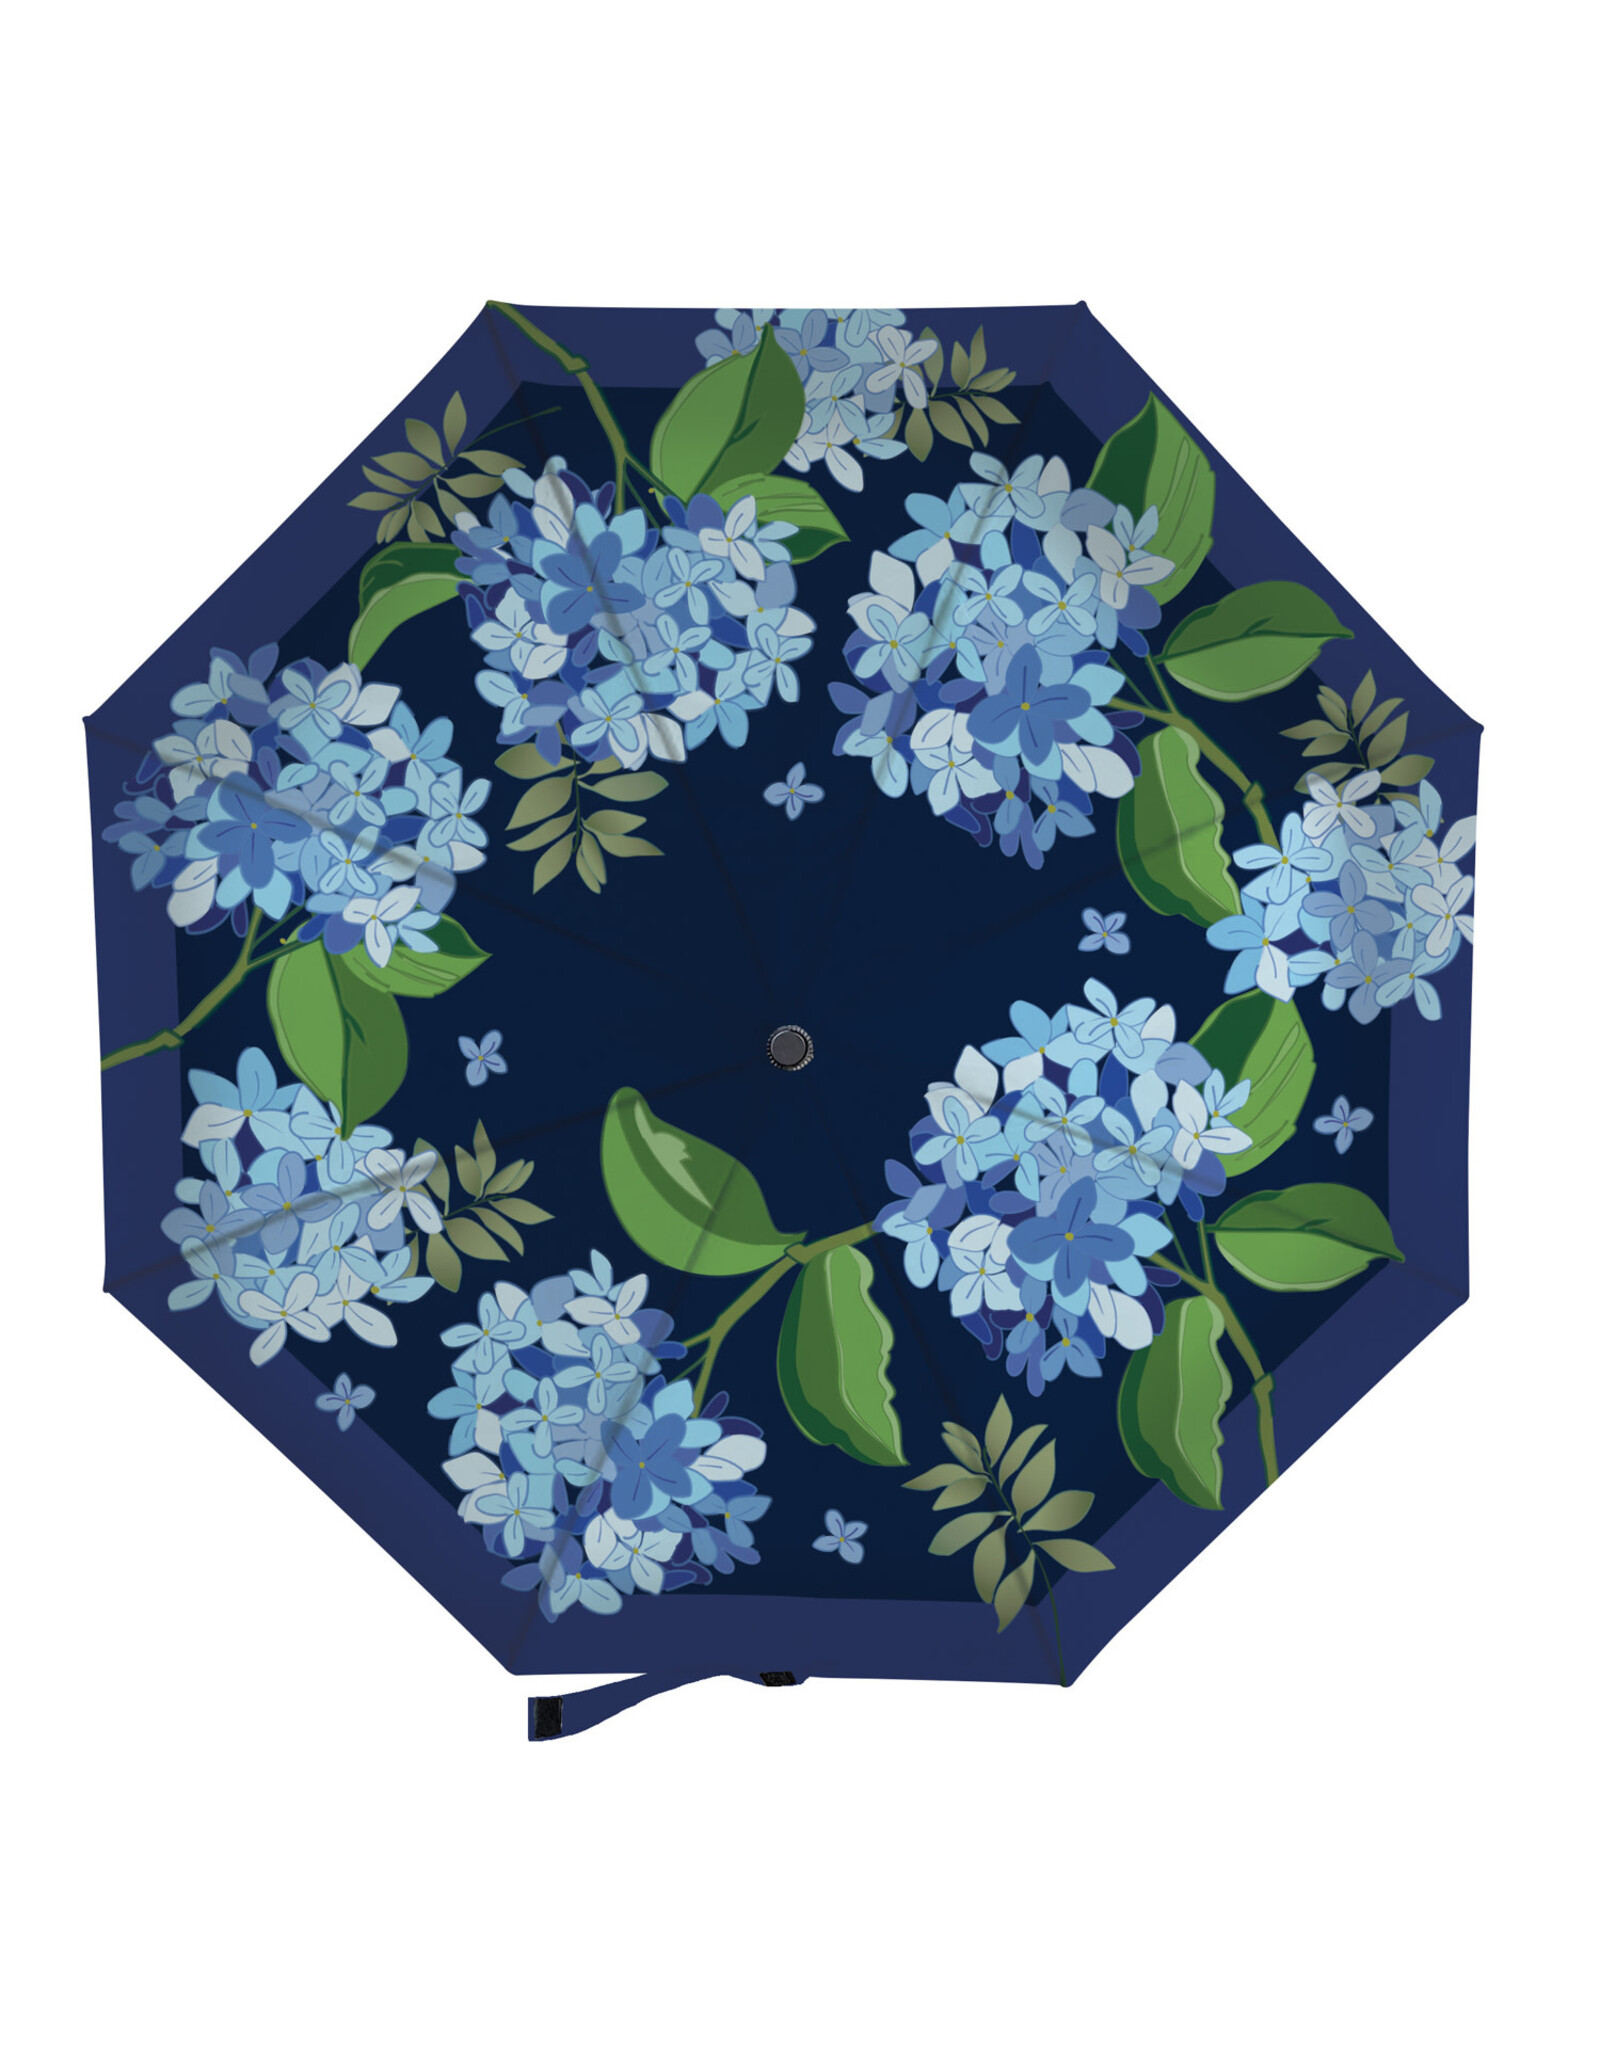 Evergreen Enterprises Hydrangea Welcome Compact Manual Umbrella